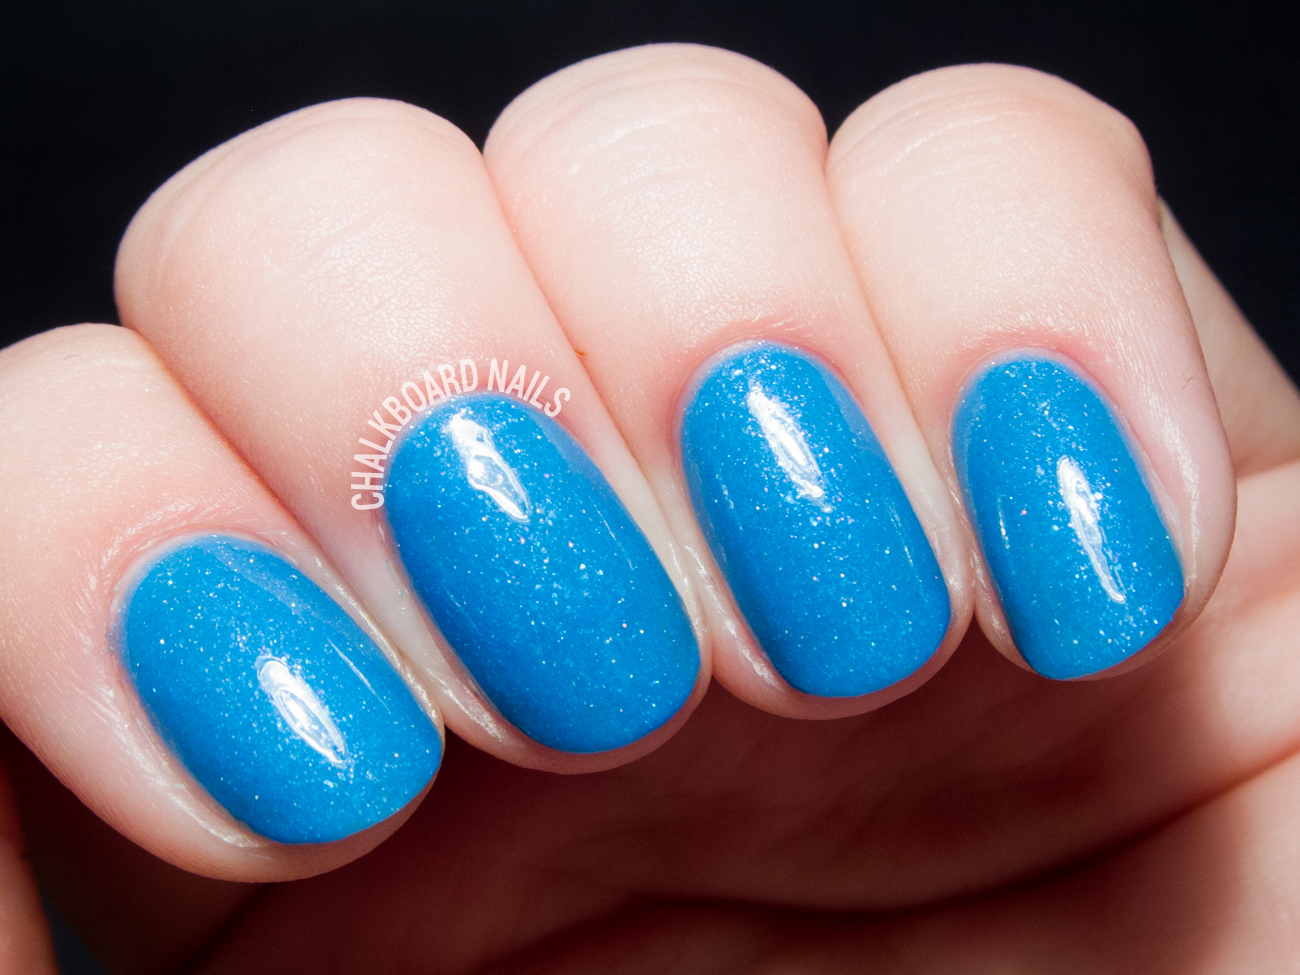 Serum No. 5 Glo-balt Blue via @chalkboardnails